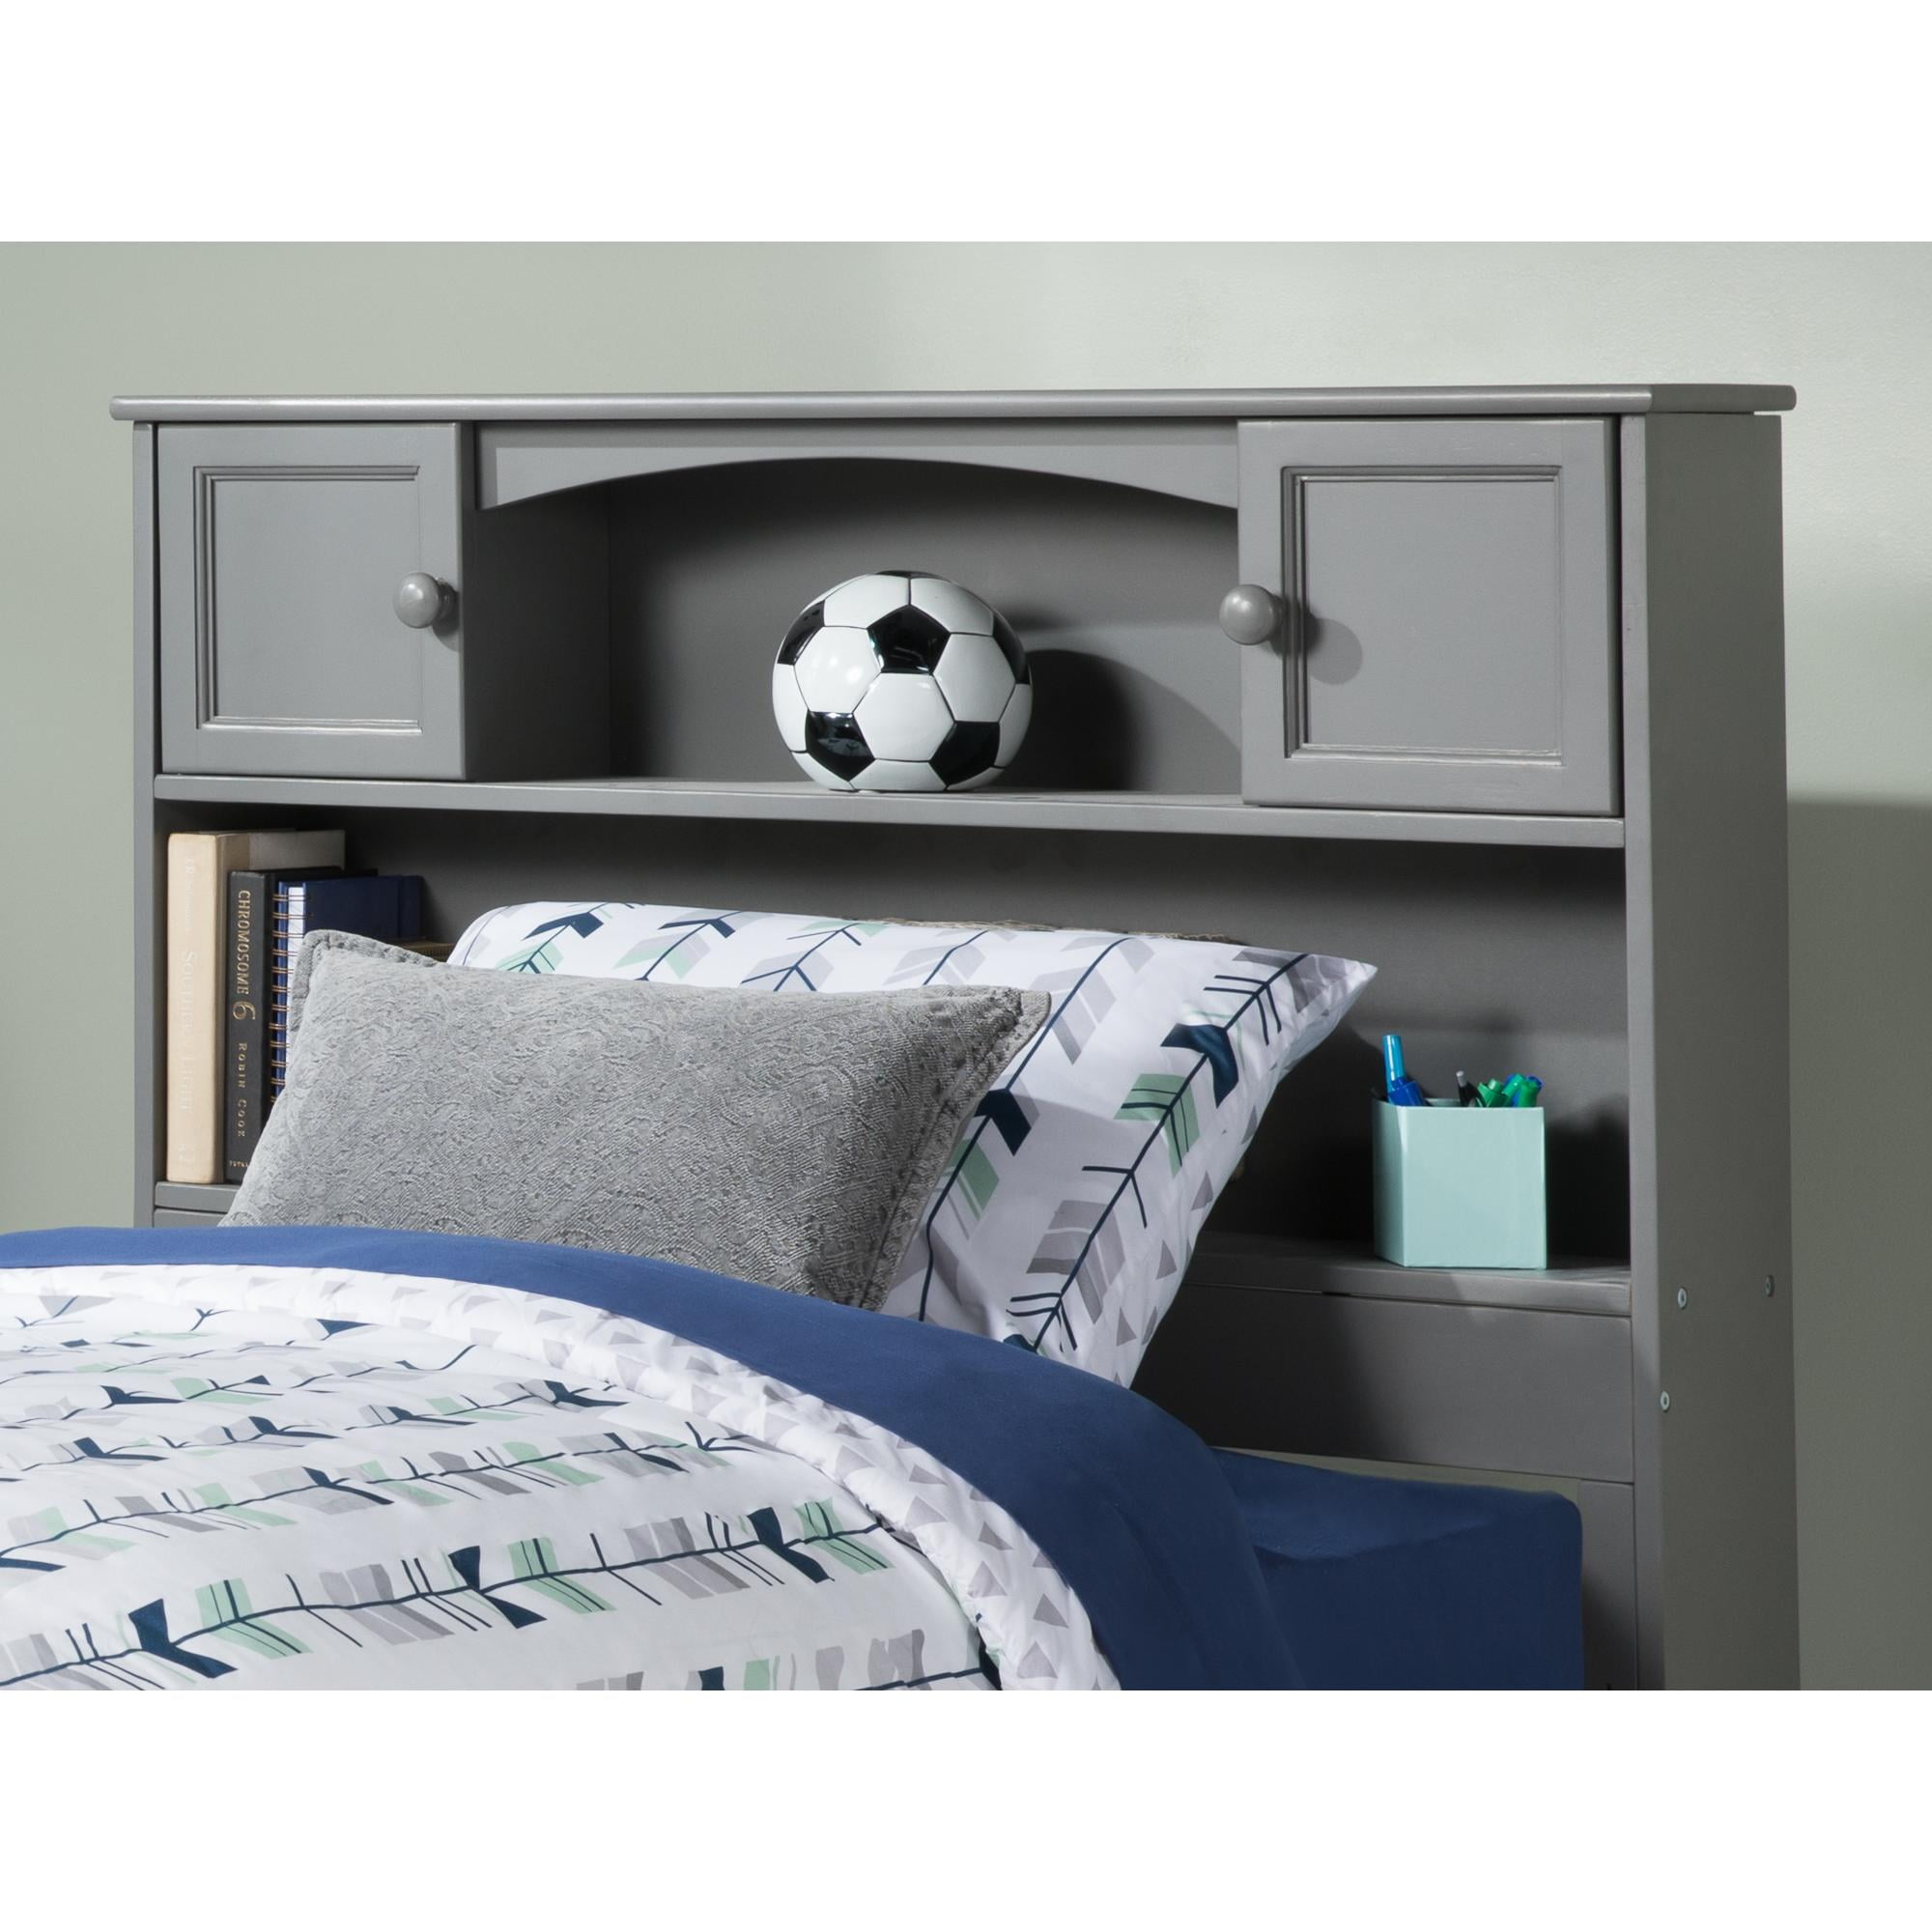 Picture of Atlantic Furniture AR285829 Newport Bookcase Headboard Twin - Grey